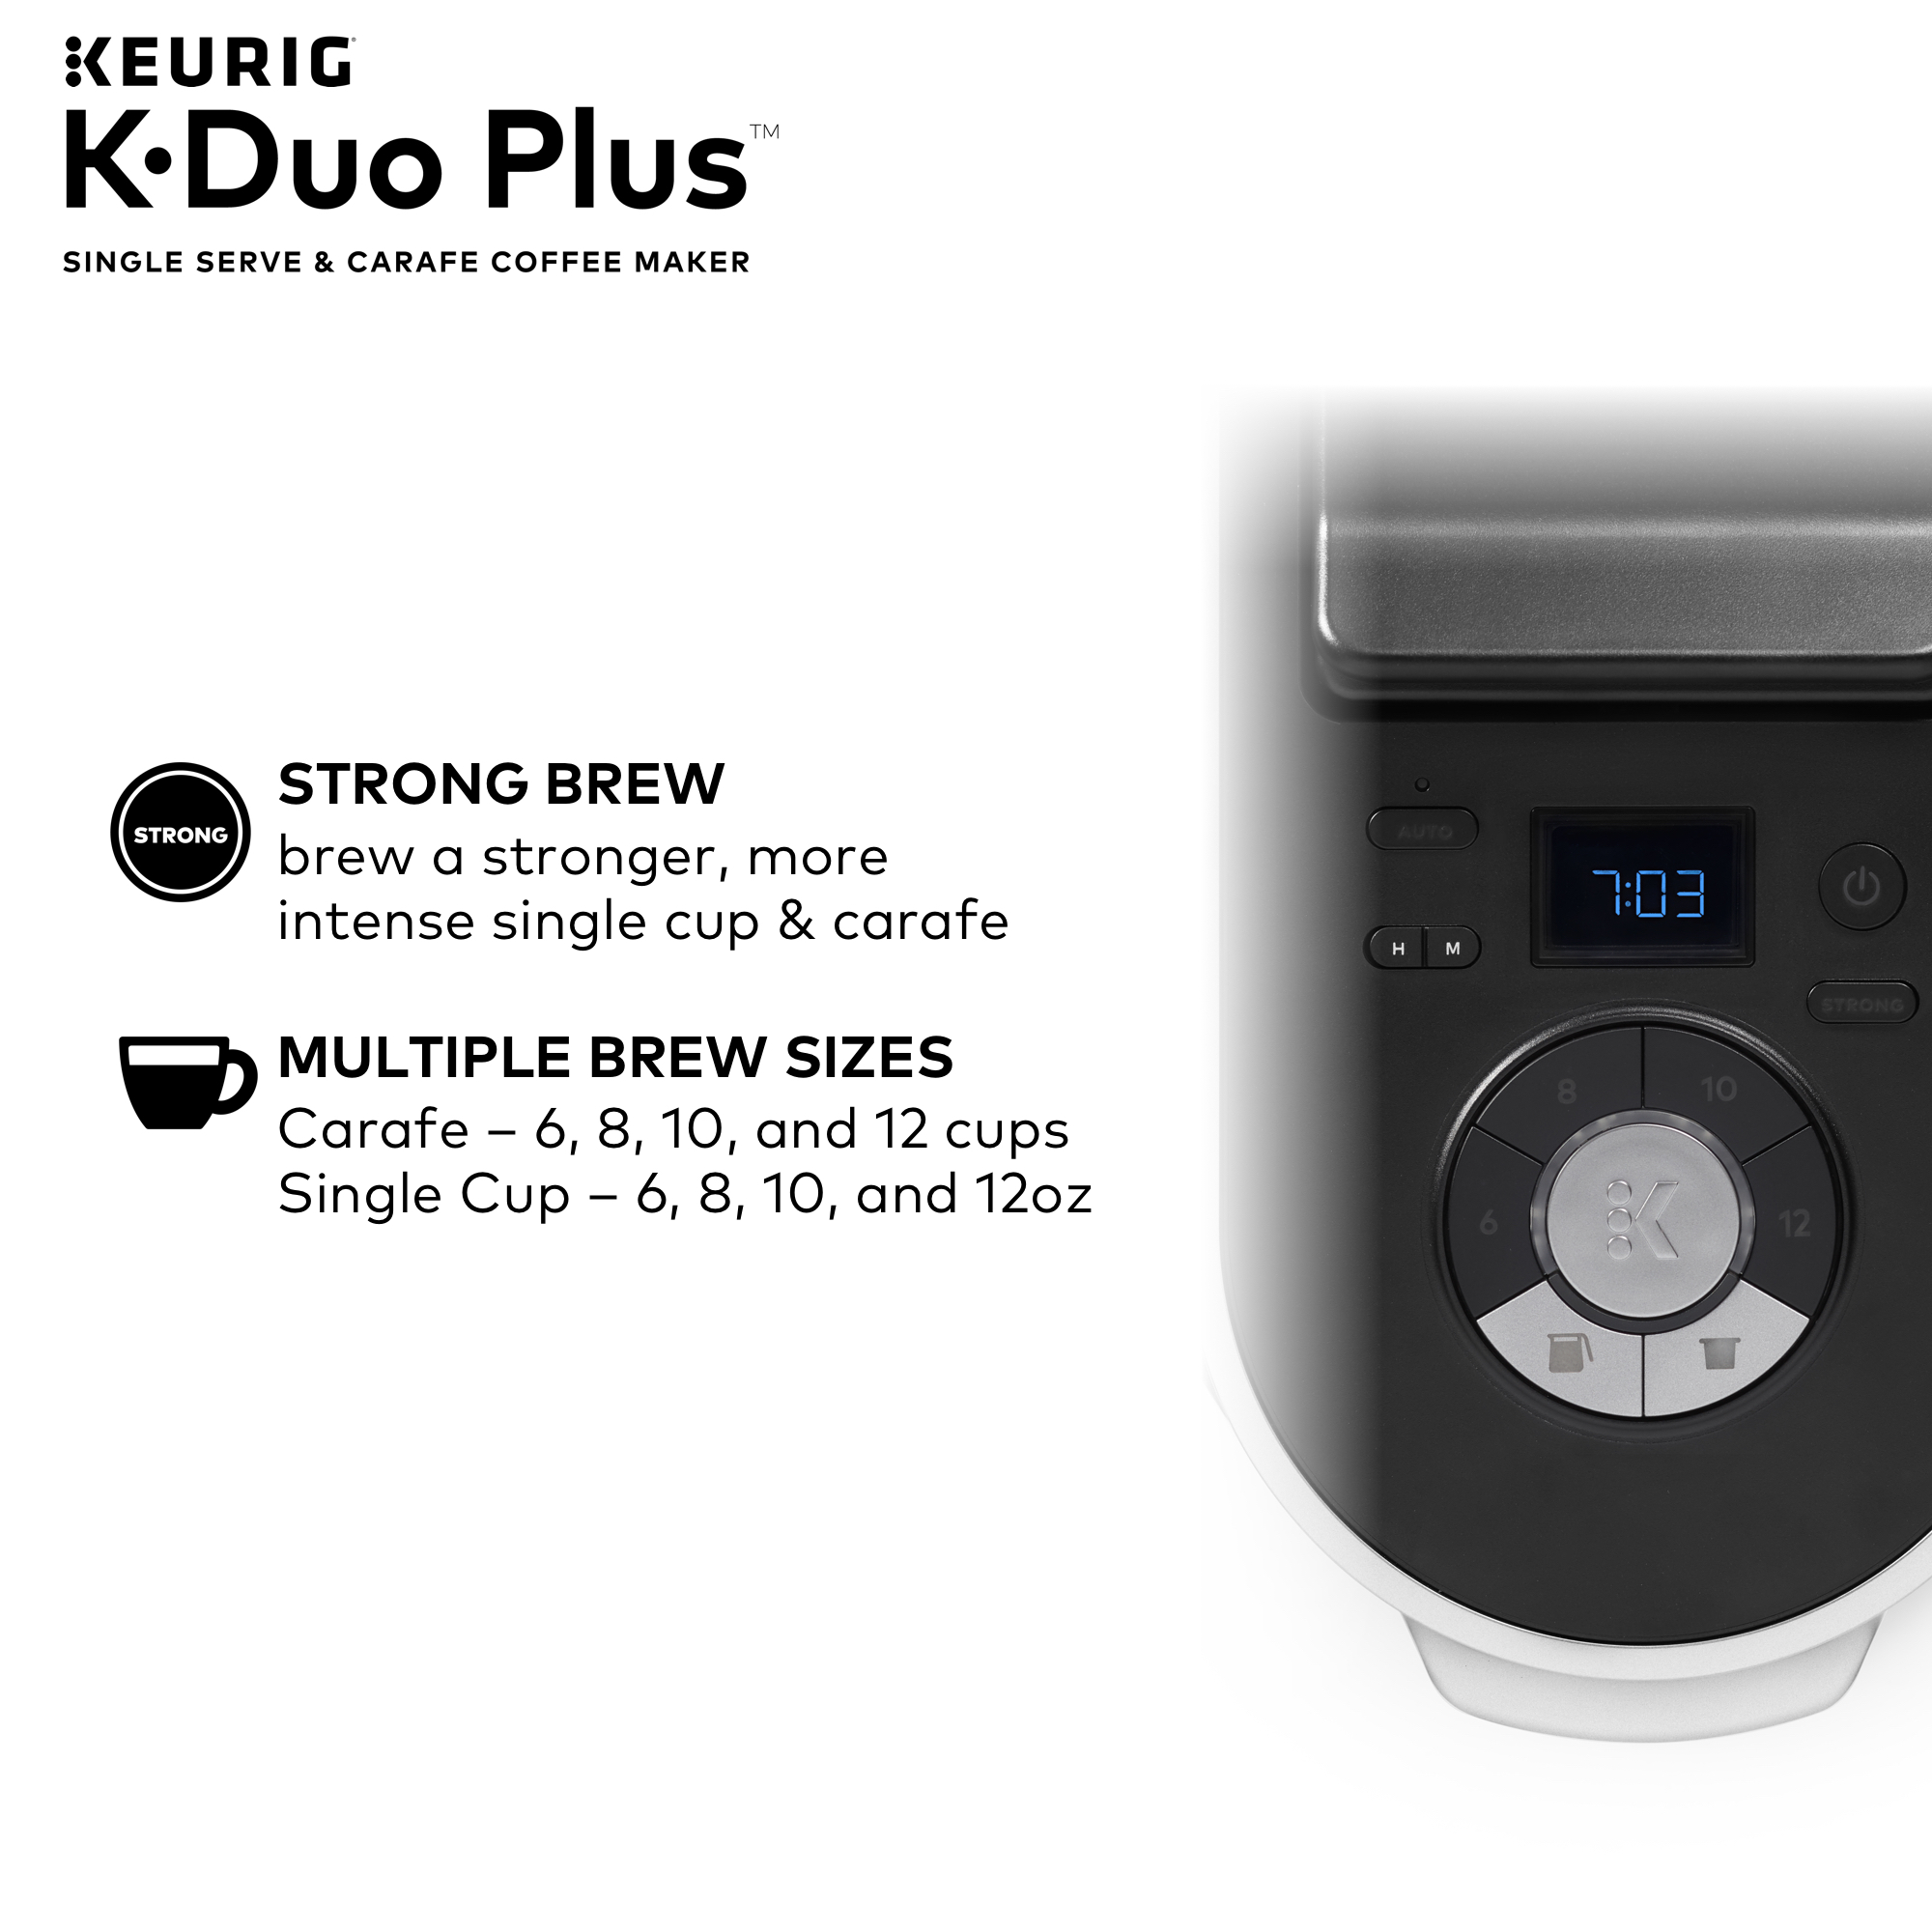 Keurig K-Duo Plus Single Serve & Carafe Coffee Maker - image 8 of 25